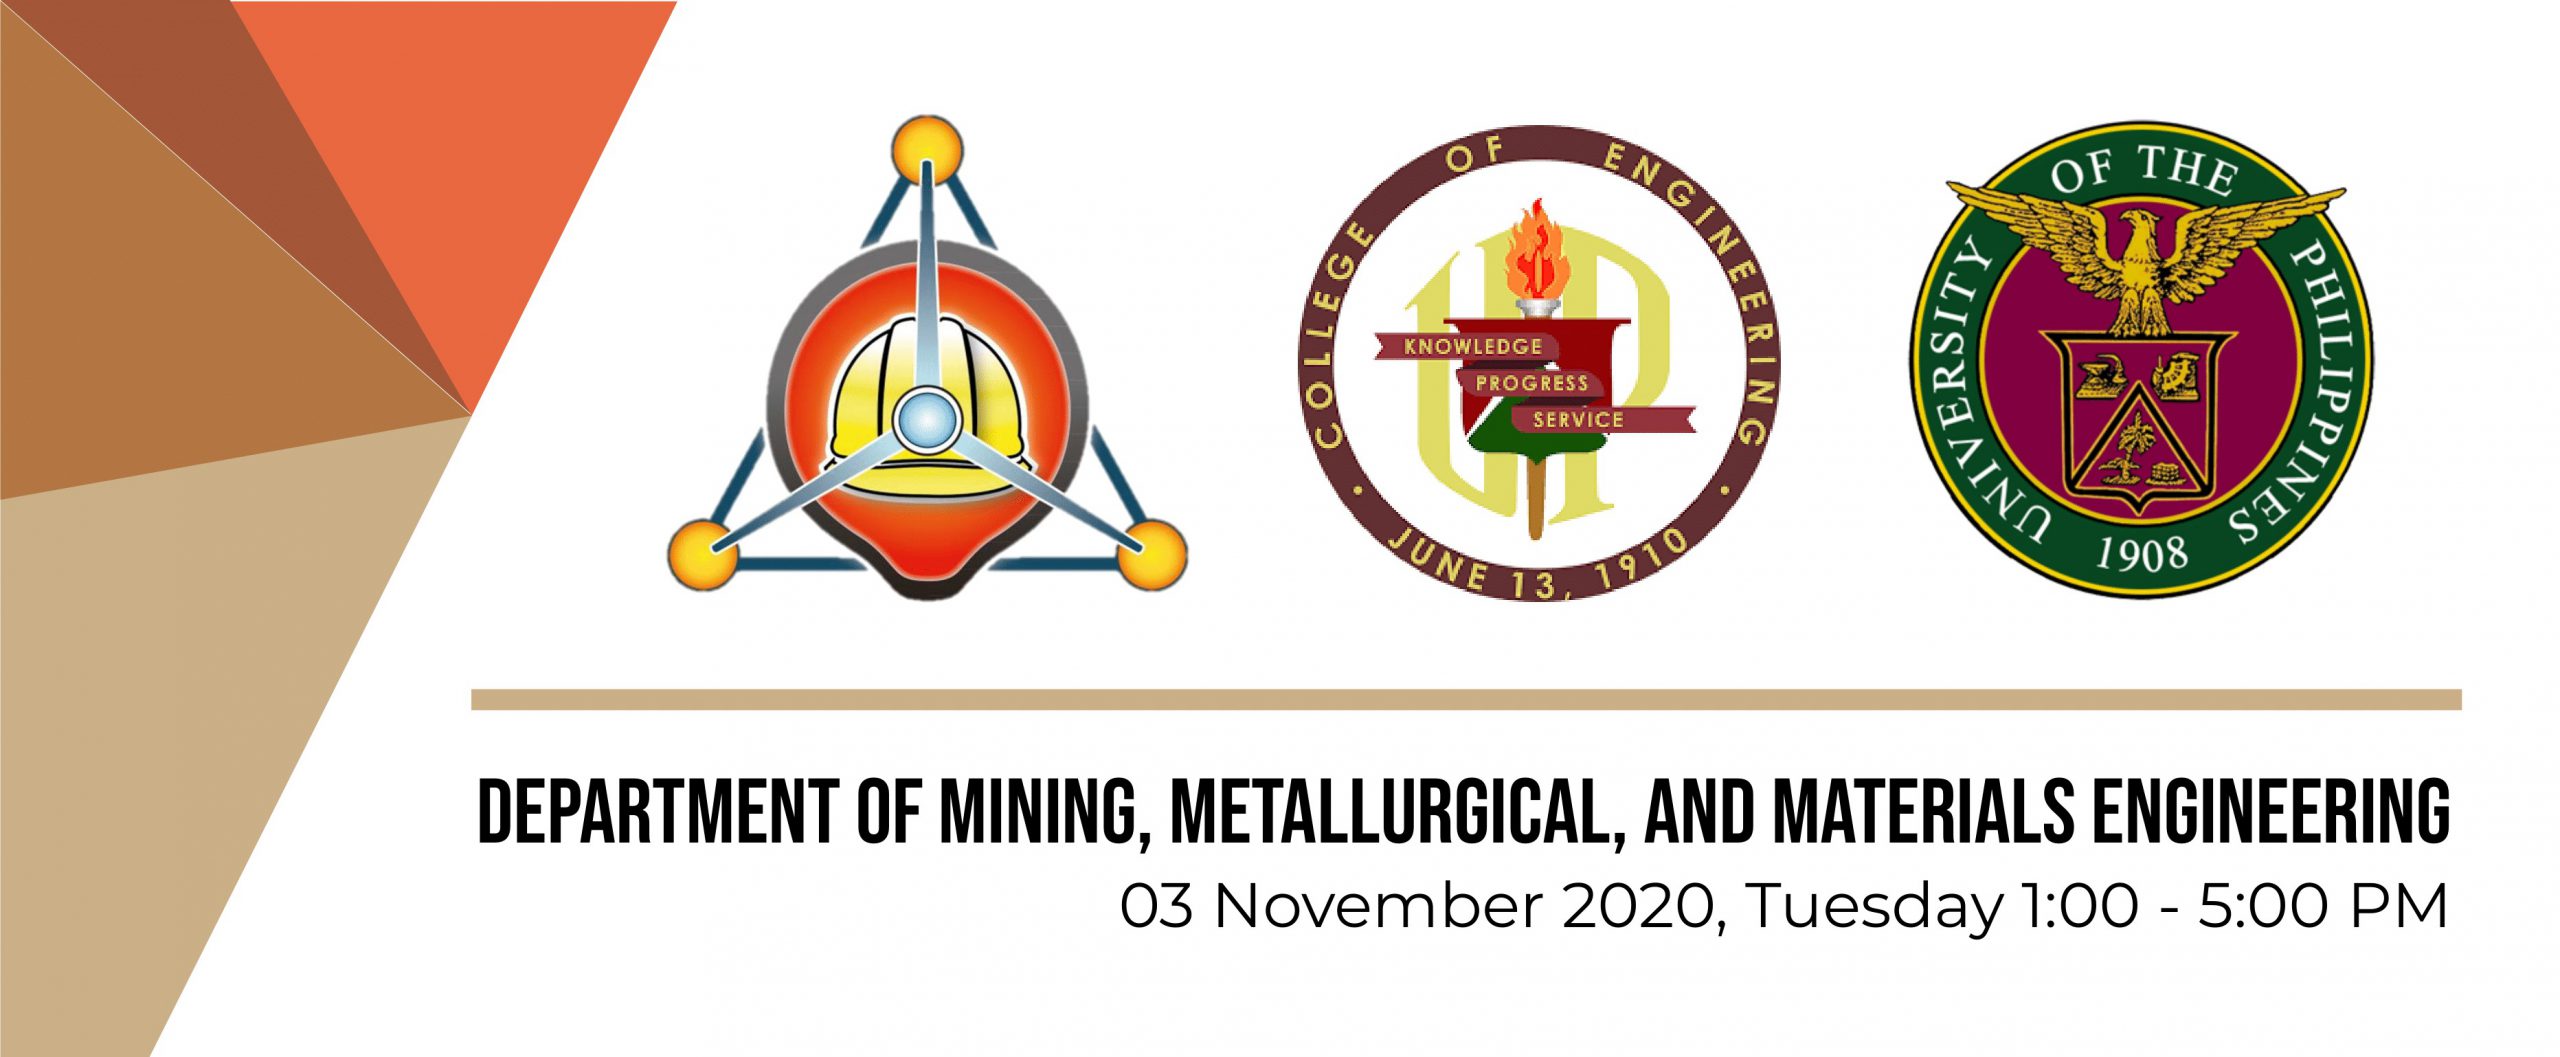 UP Department of Mining, Metallurgical and Materials Engineering PCA (Professorial Chair Awards) Colloquium